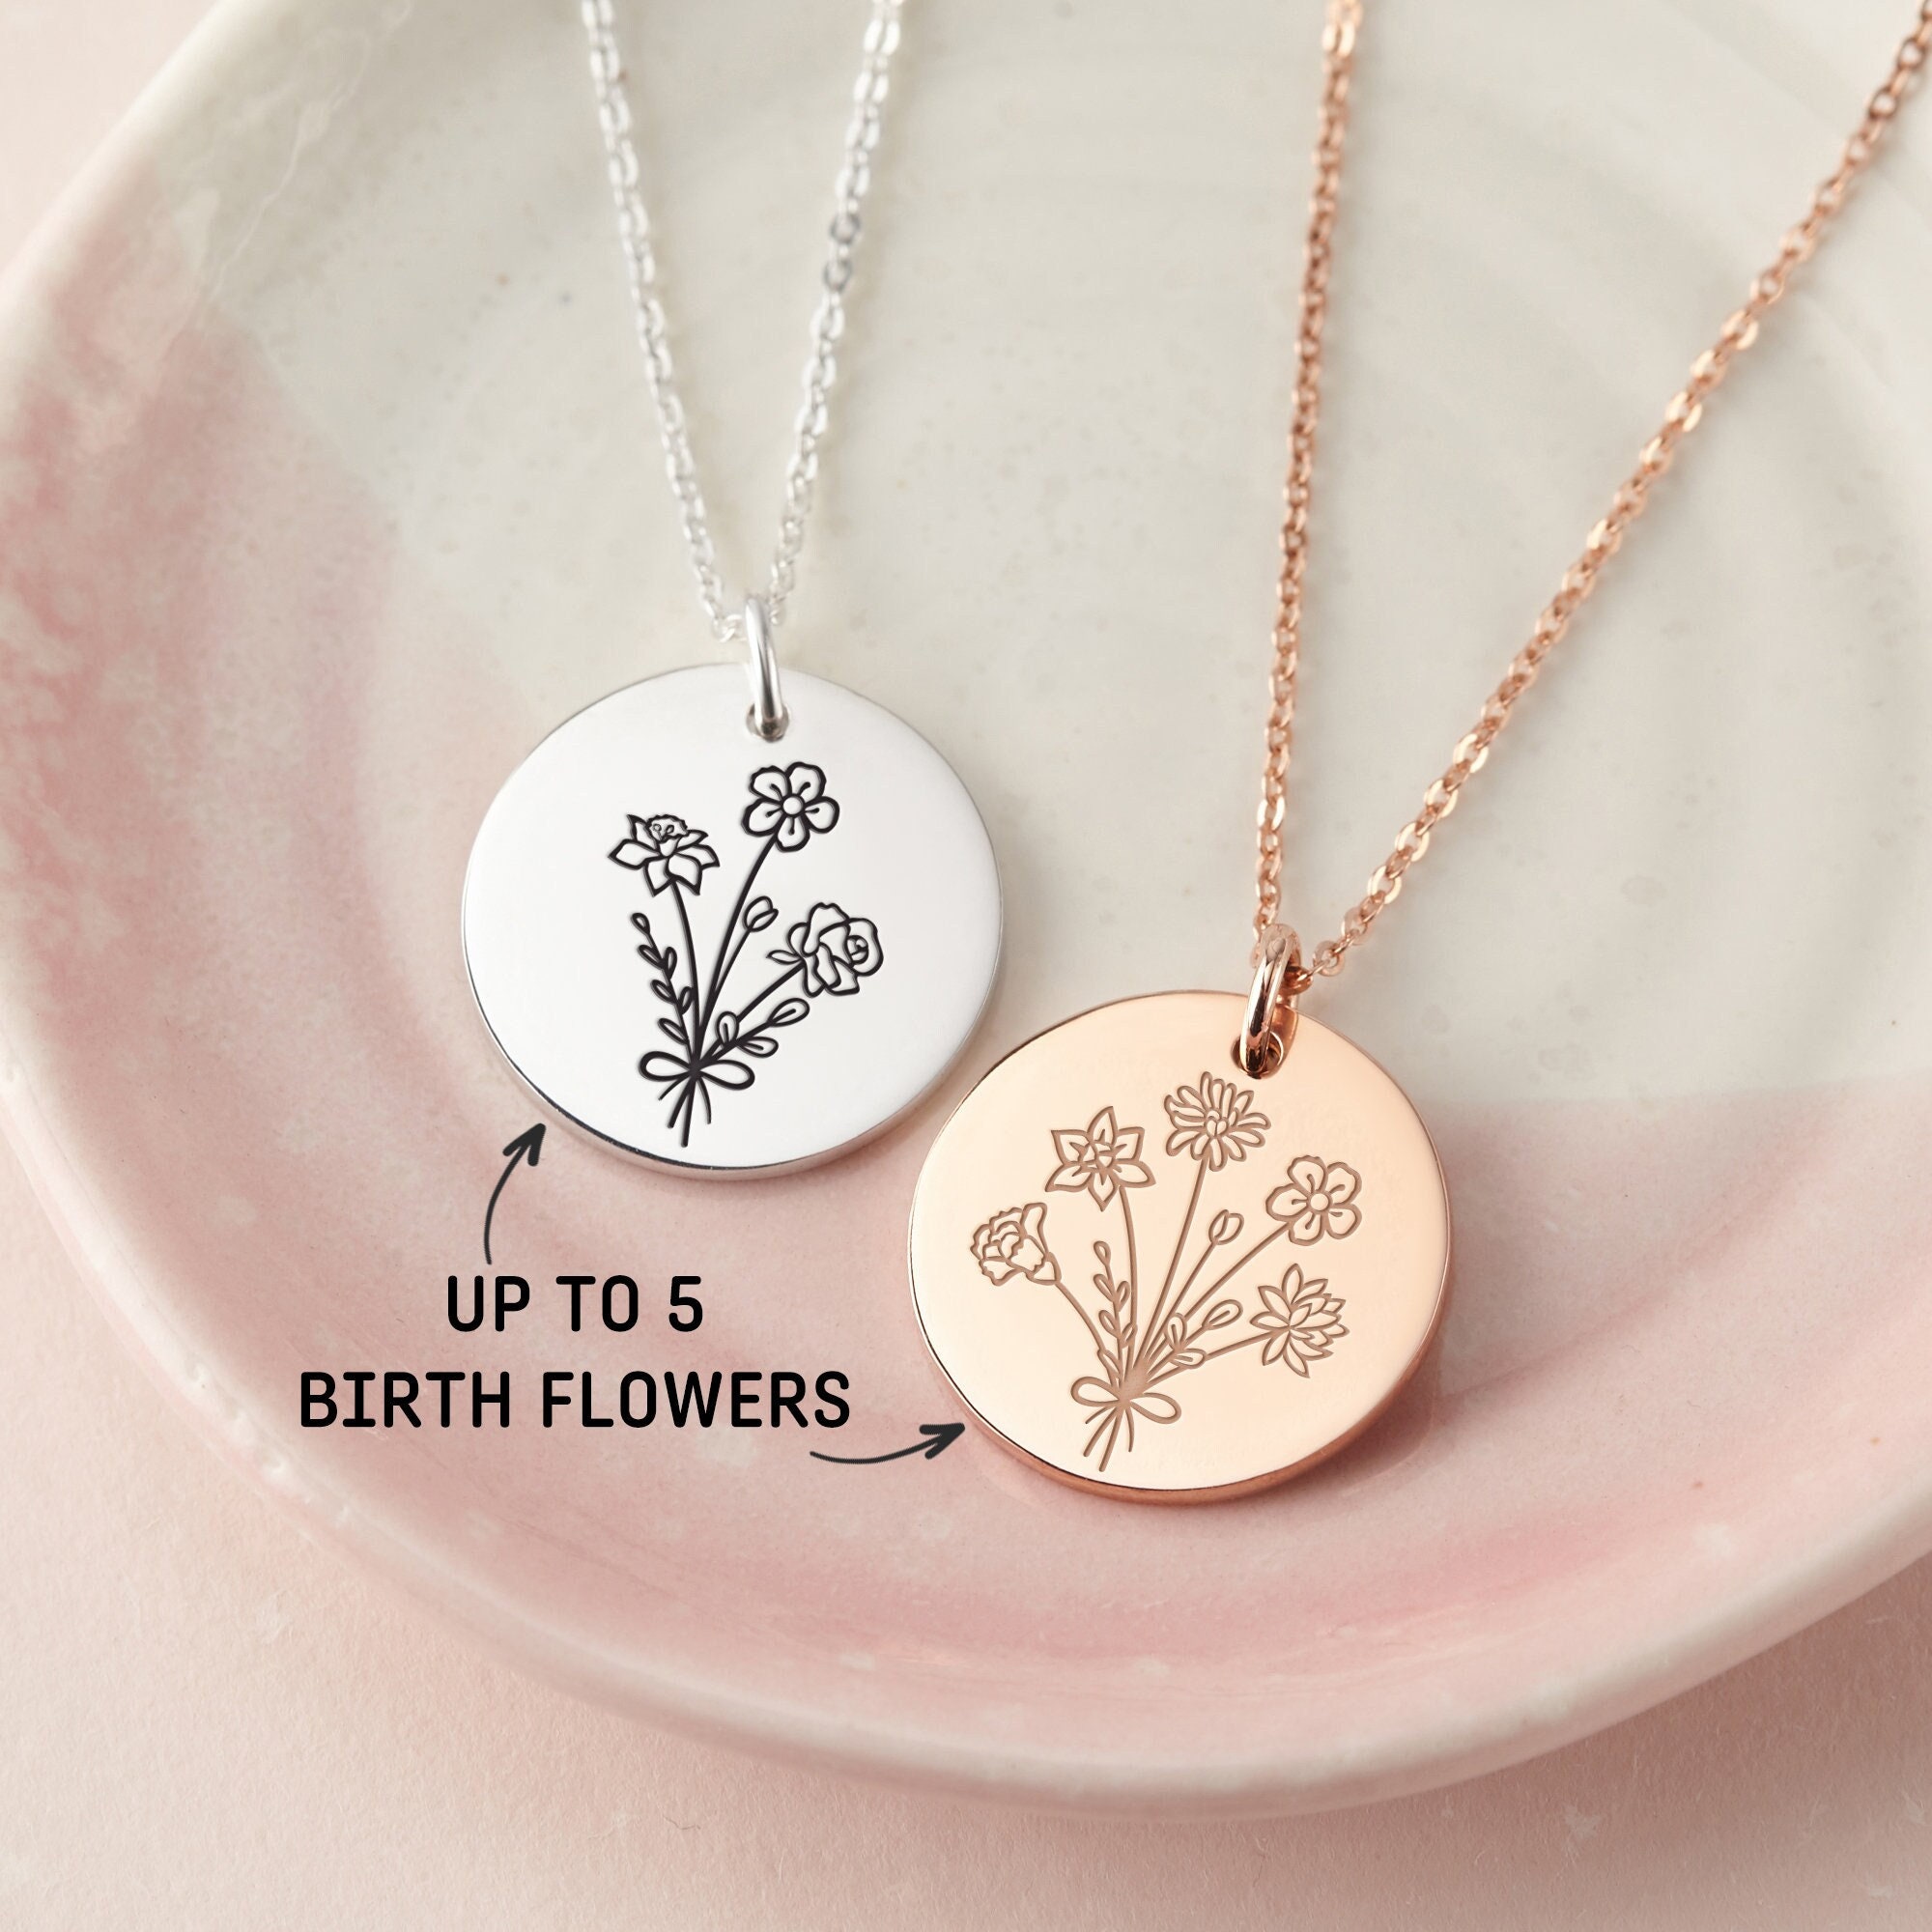 Birth Flower Jewelry, Birth Flower Necklace - Everly Made